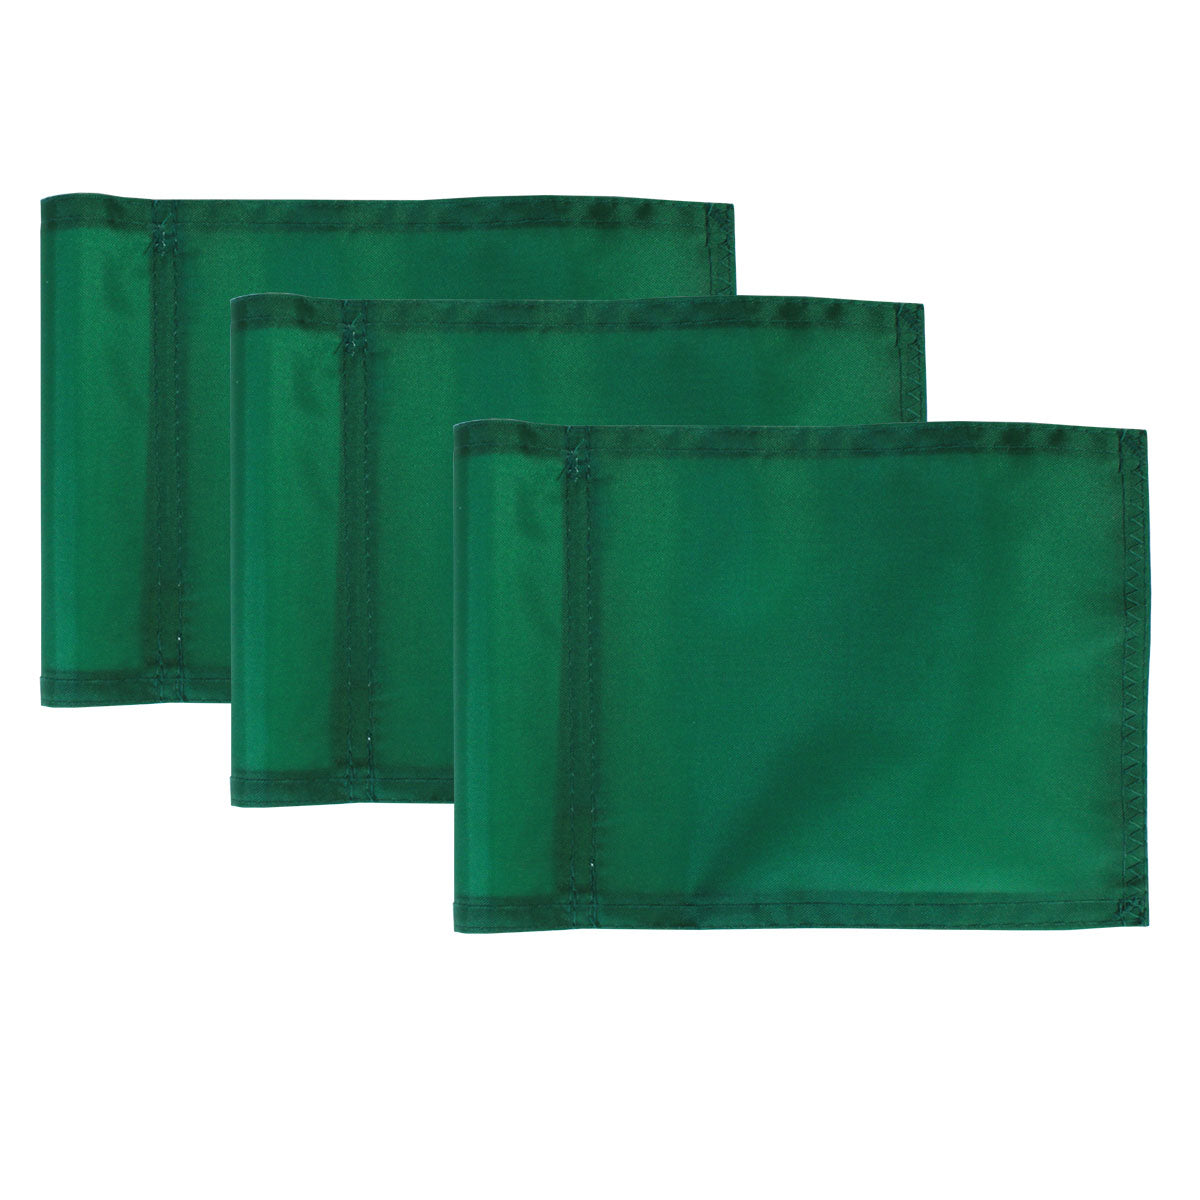 Practice Green Nylon Tube Flag - Set of 3 6"x8" Flags